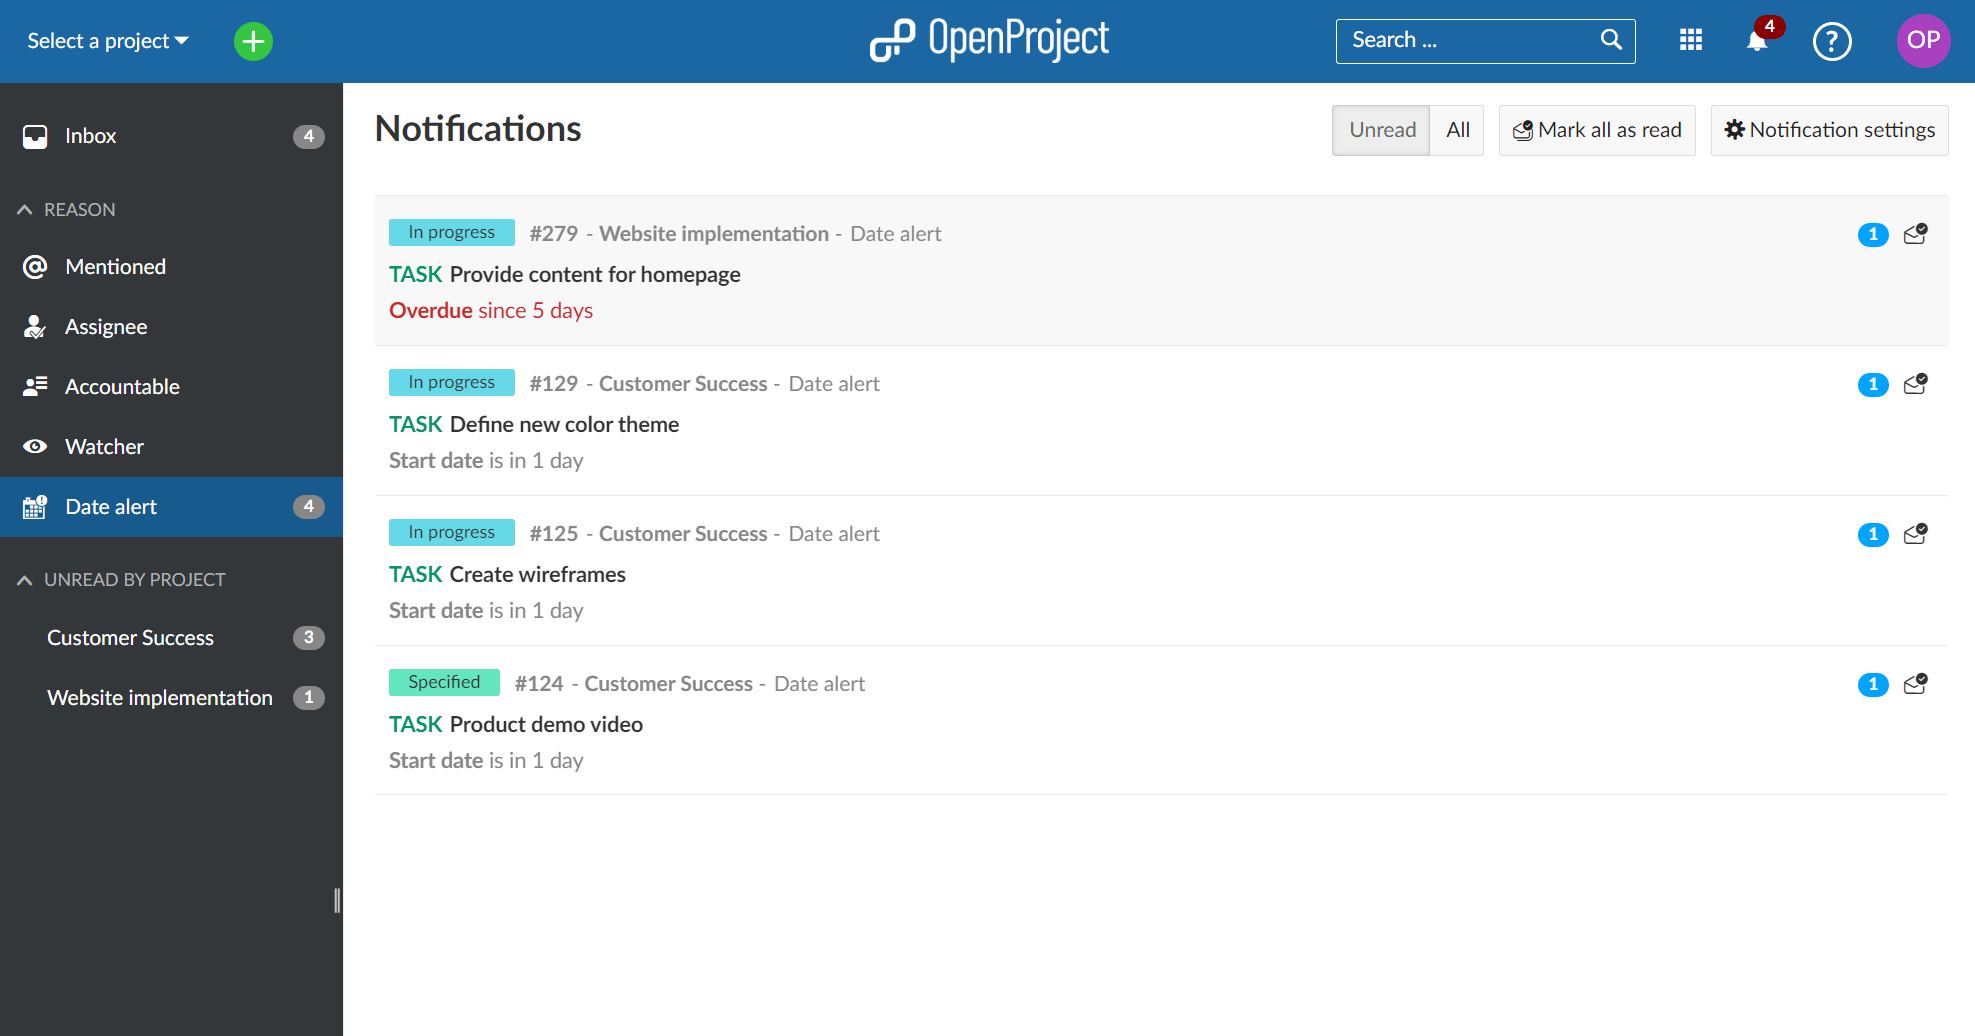 OpenProject notifications approaching date